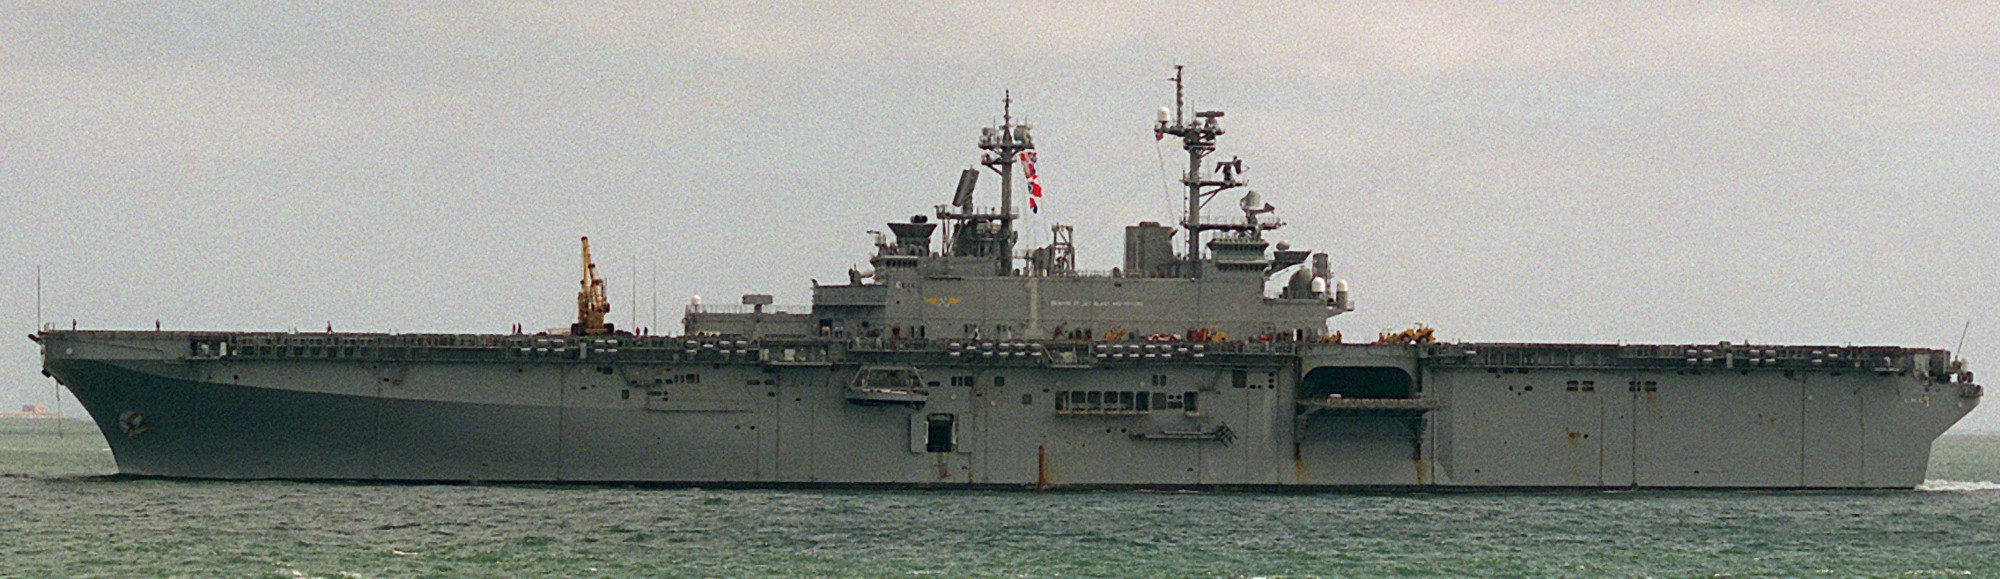 lhd-1 uss wasp amphibious assault landing ship dock helicopter us navy chesapeake bay 101